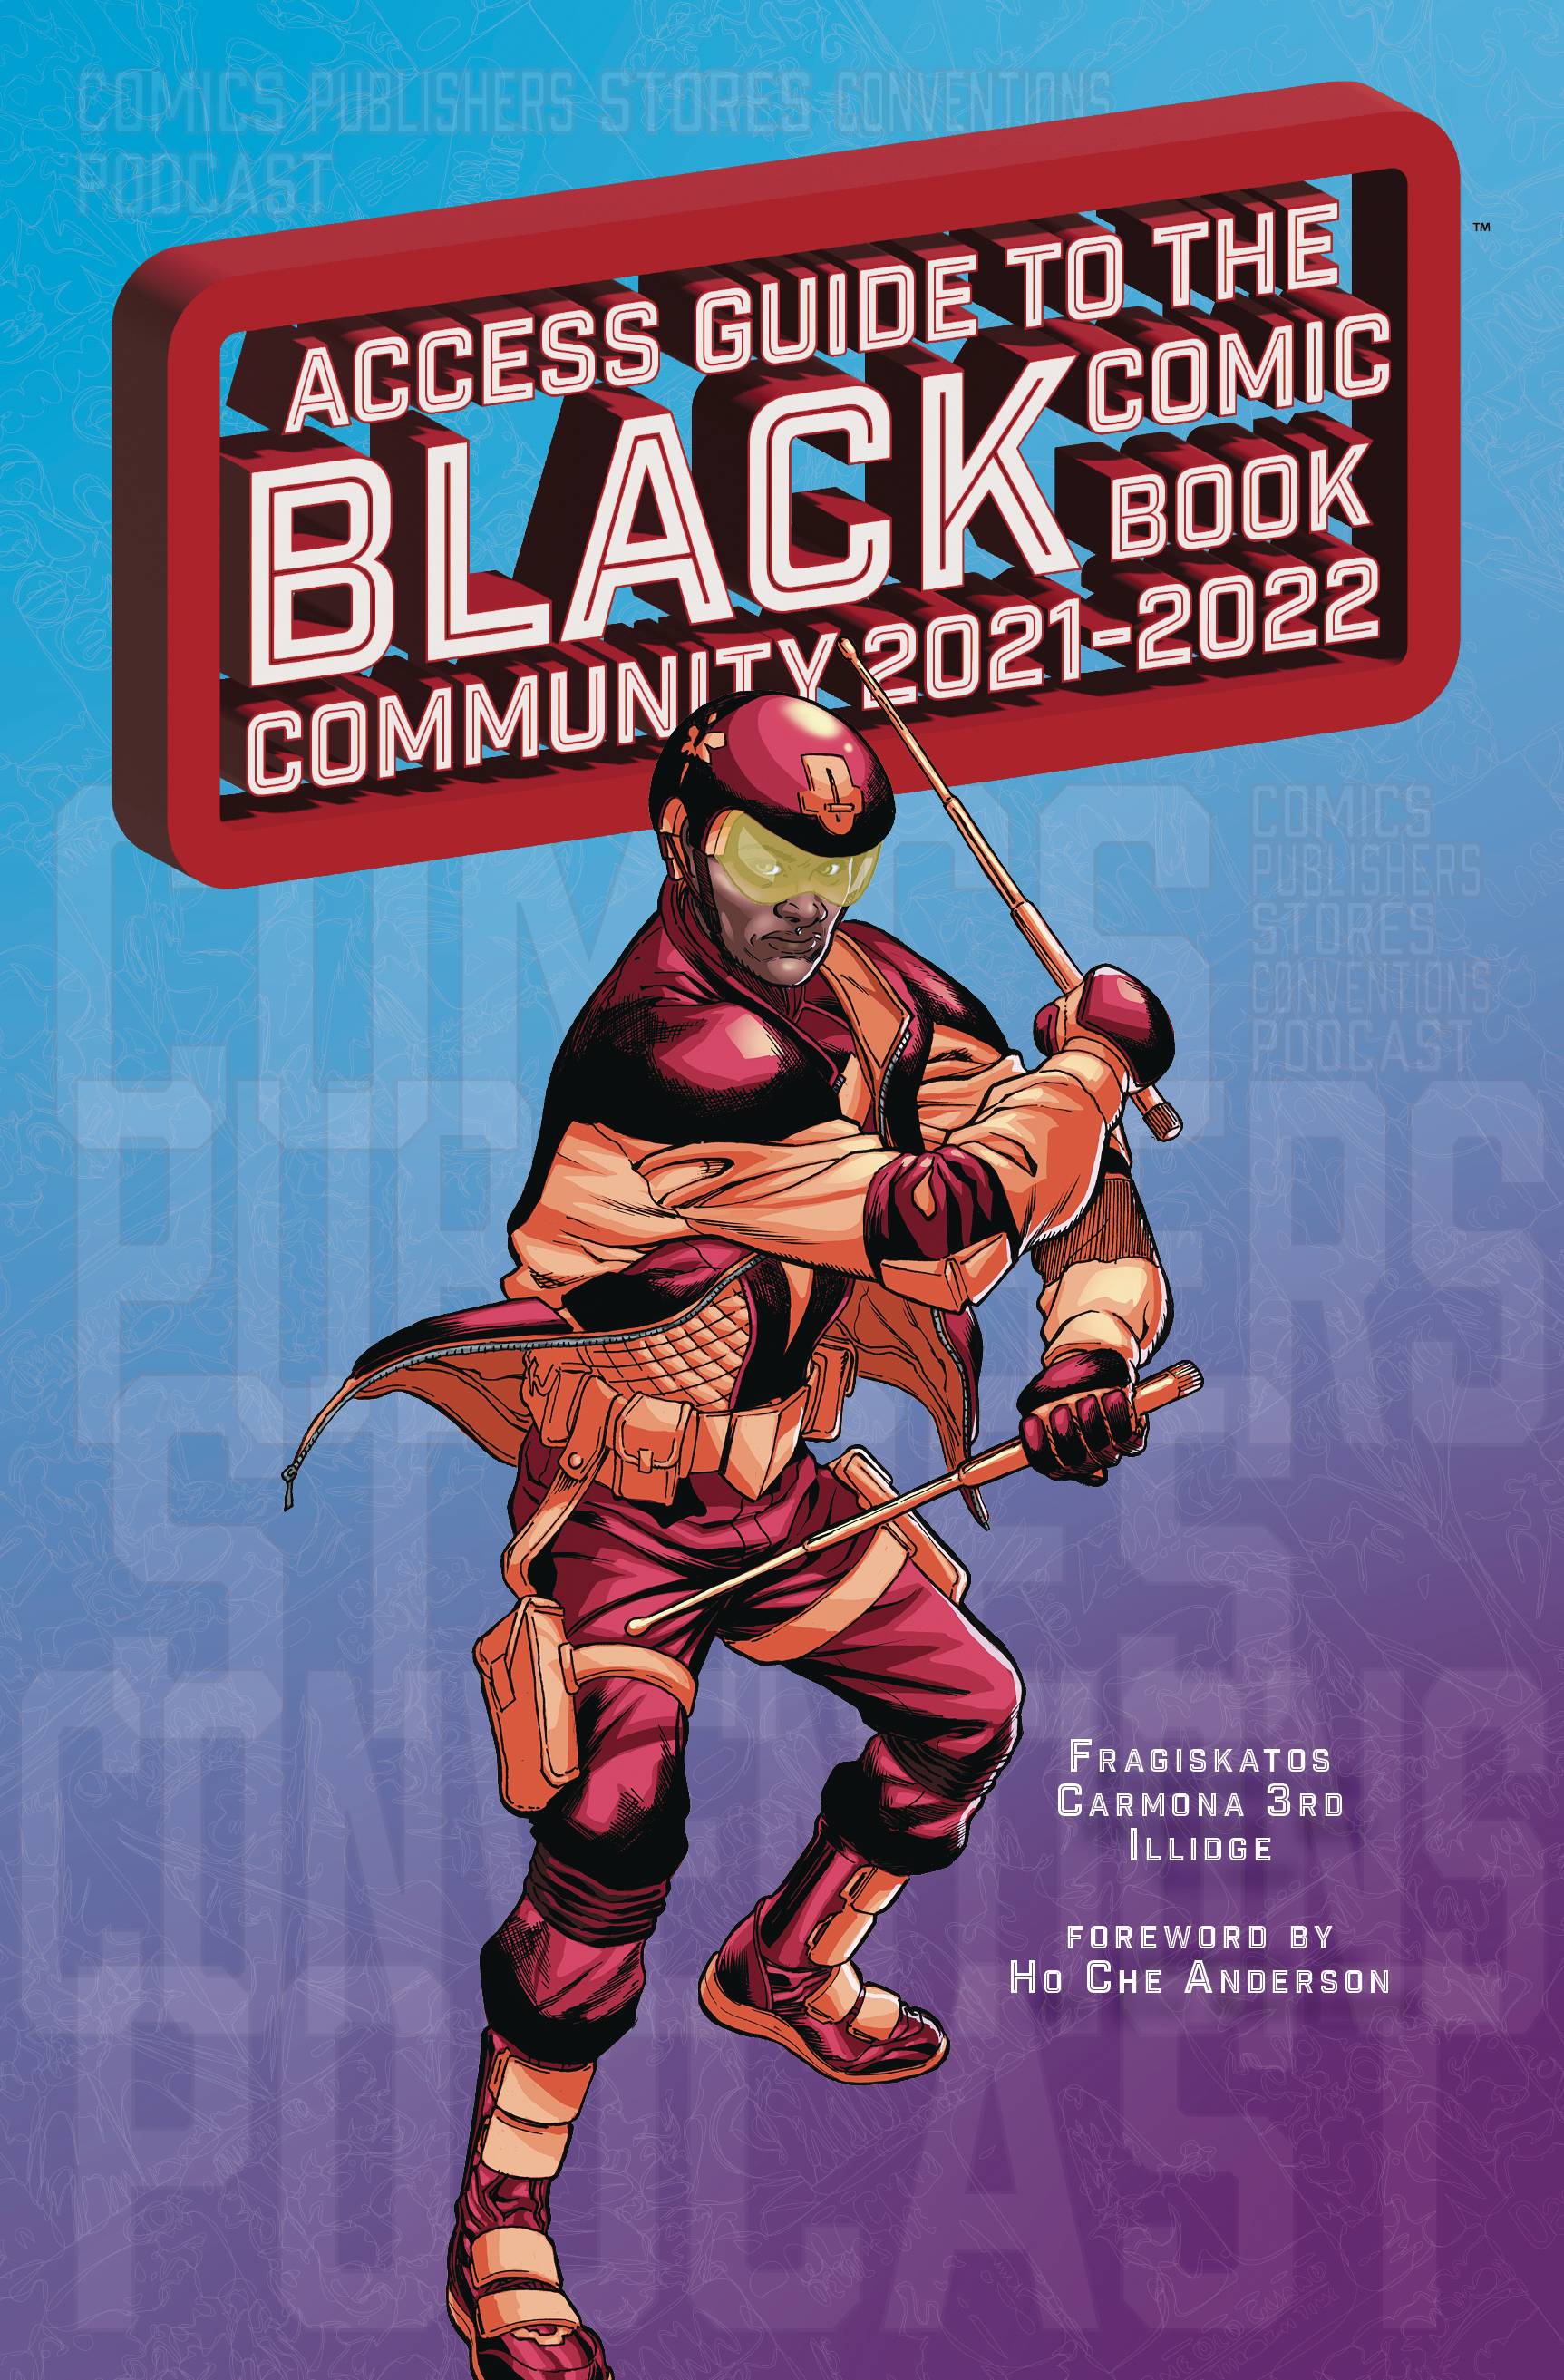 ACCESS GUIDE BLACK COMIC BOOK COMMUNITY 2021-22 SC